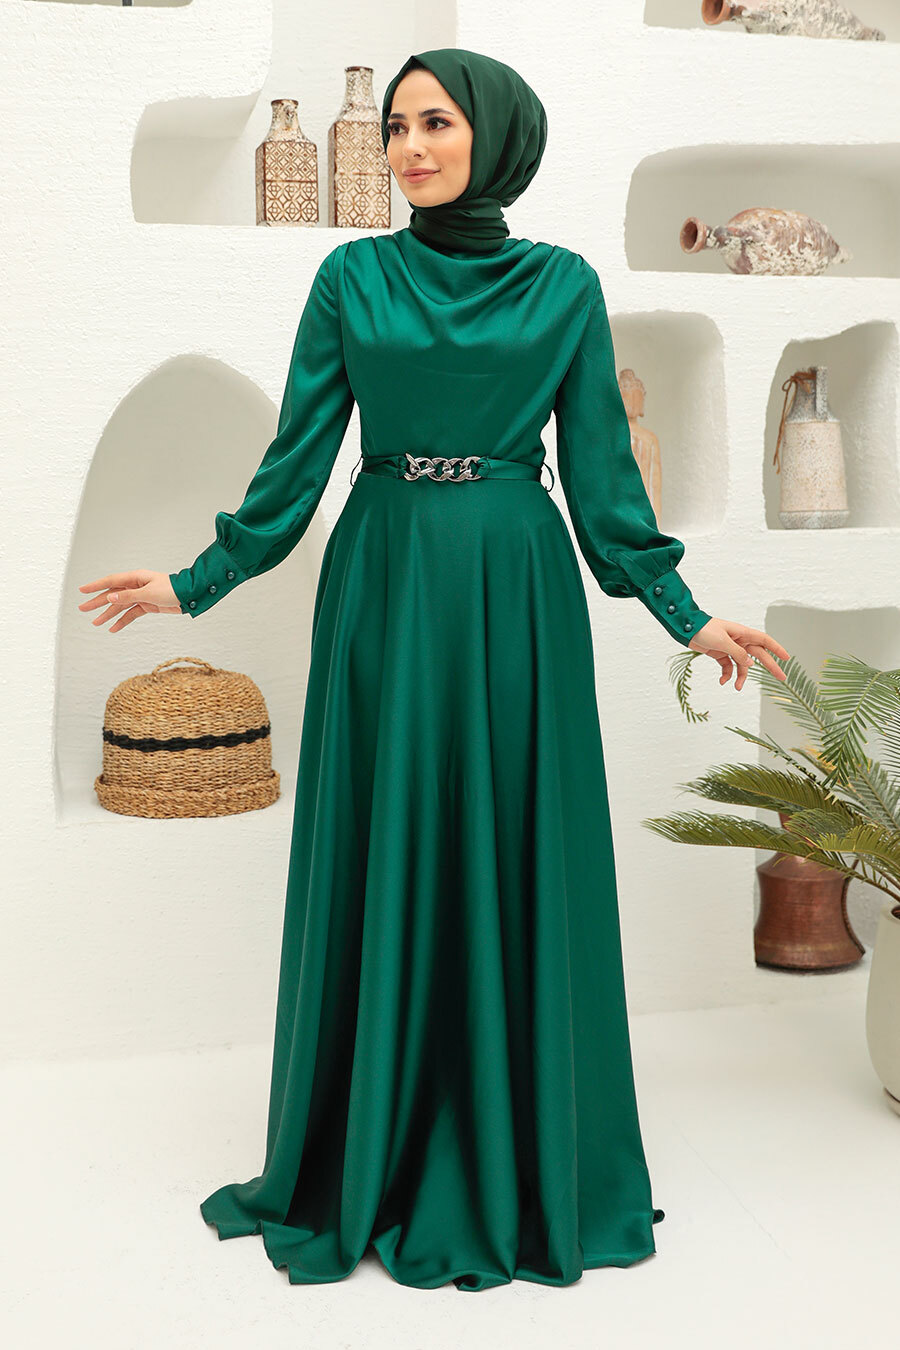 Neva Style - Elegant Green Muslim Engagement Dress 3460Y